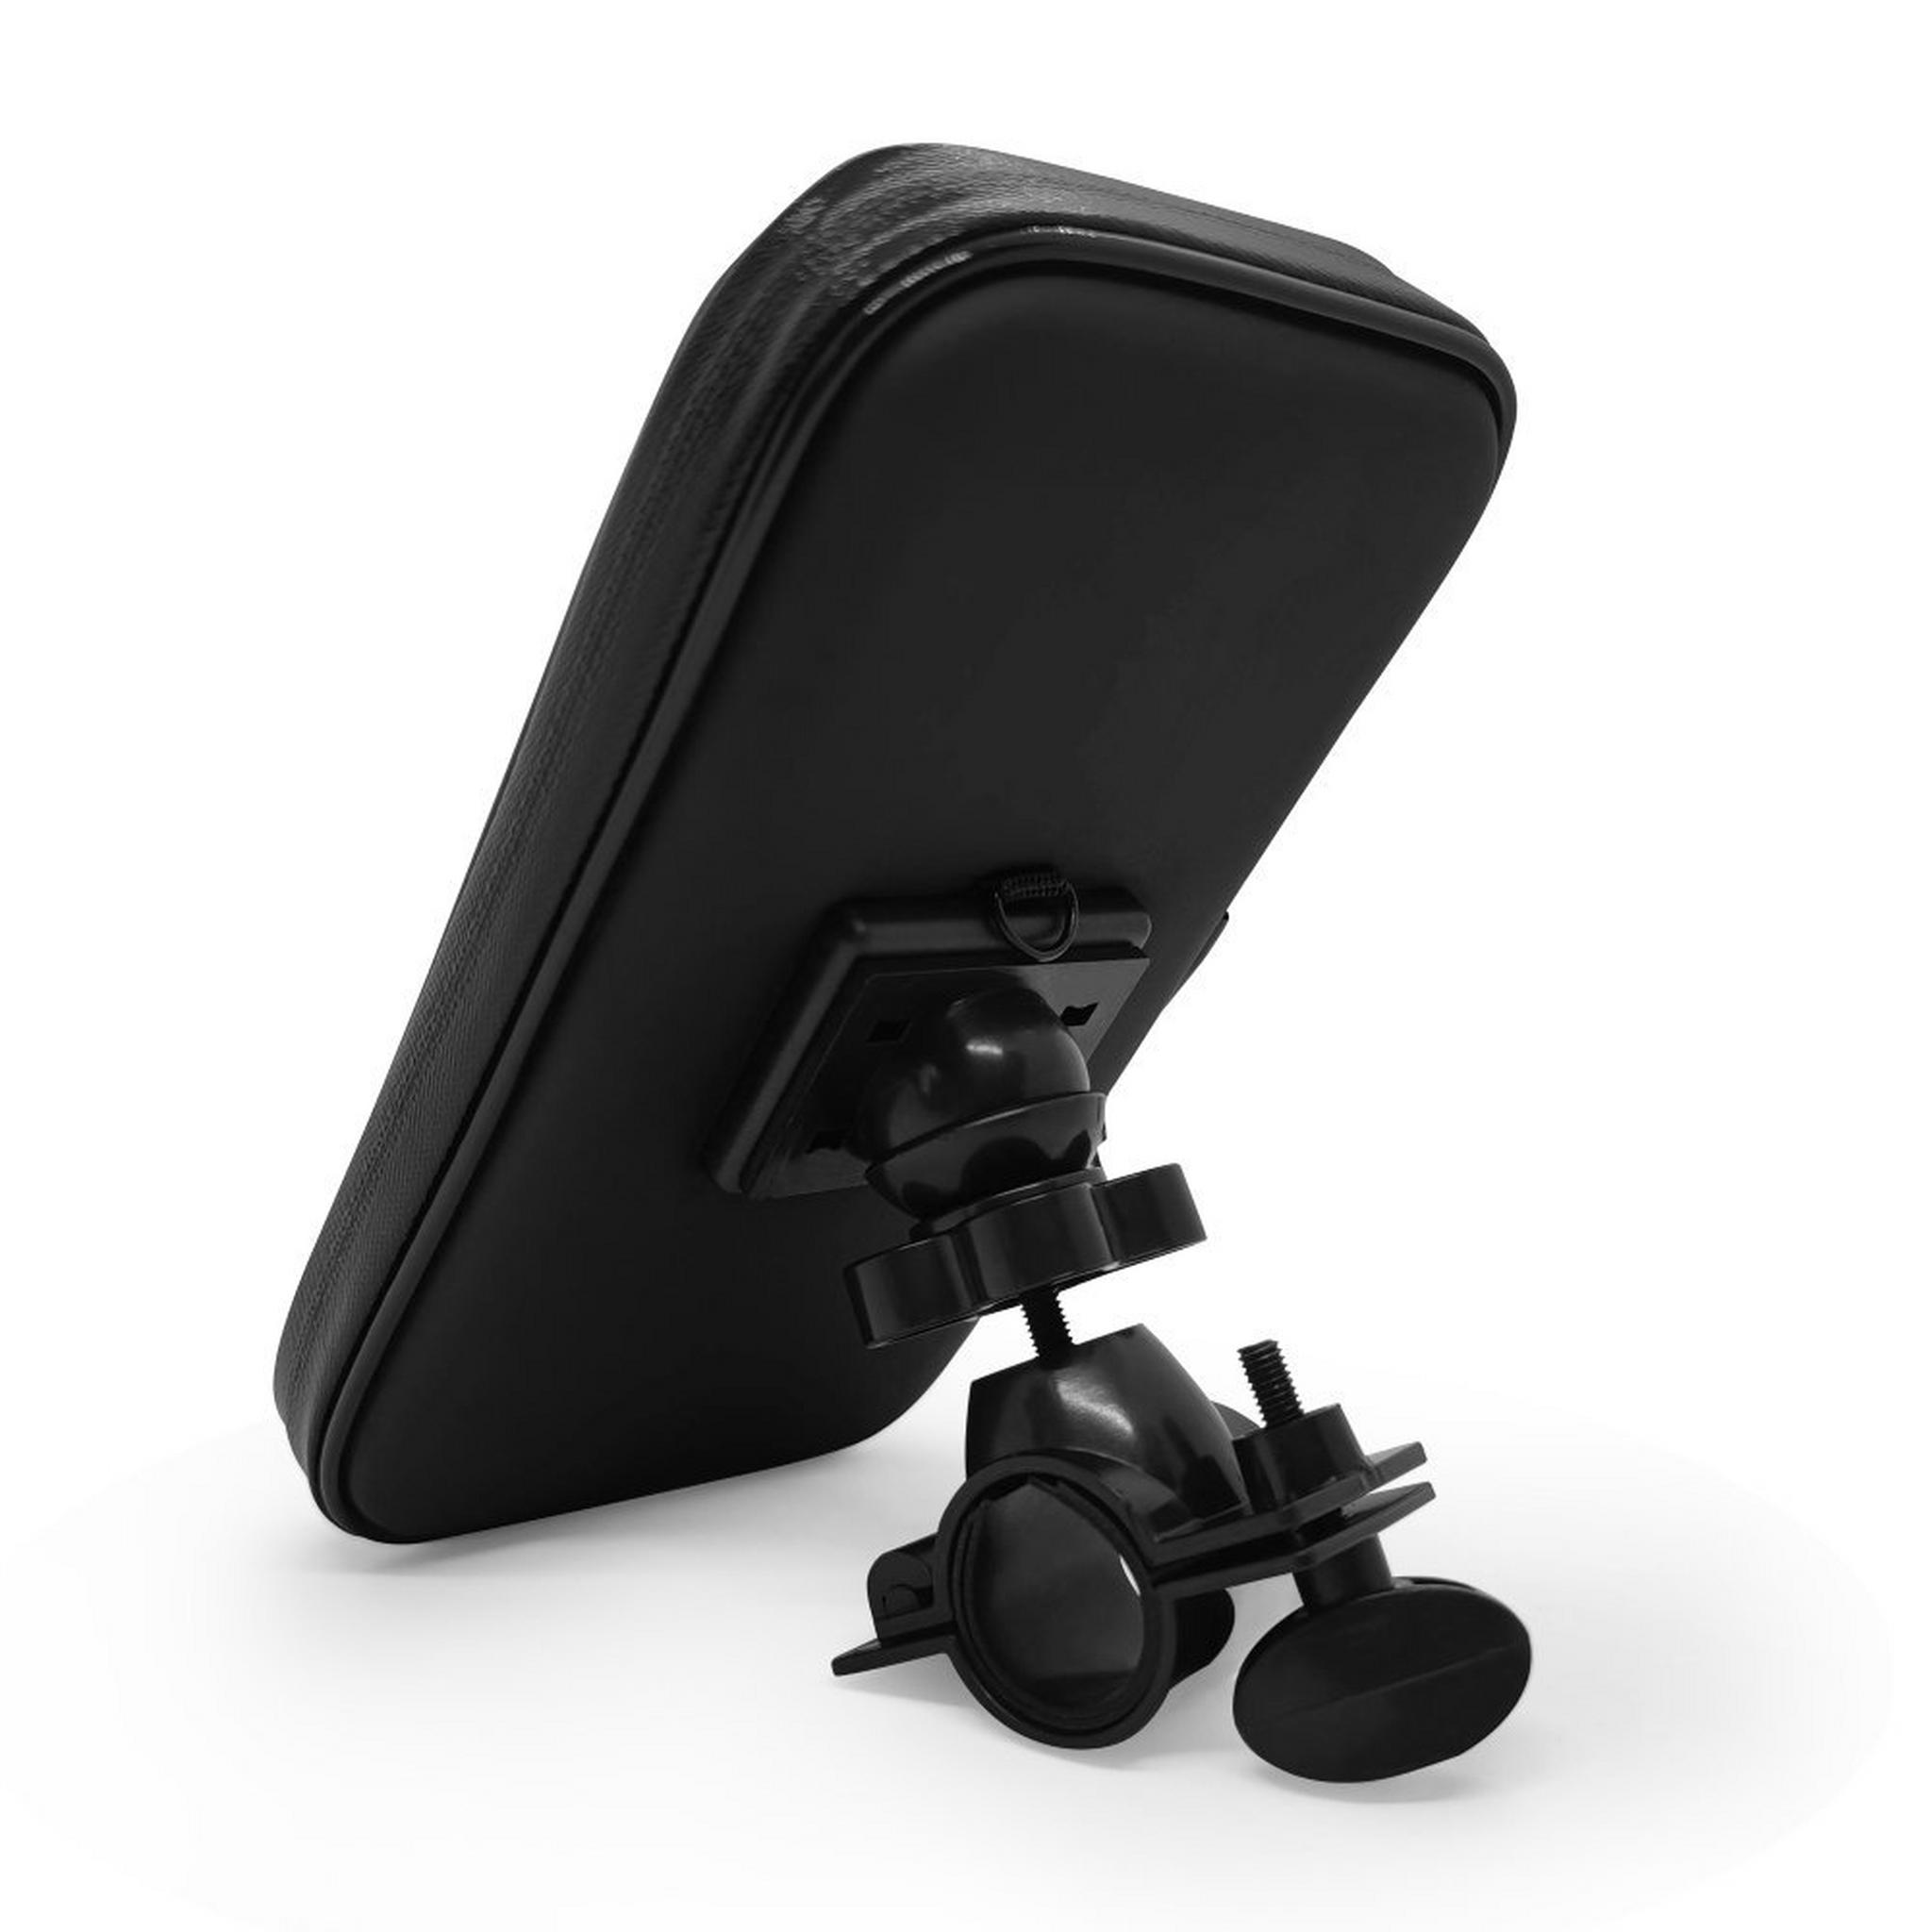 EQ 6.5-inch Bike Mount for Phones - Black